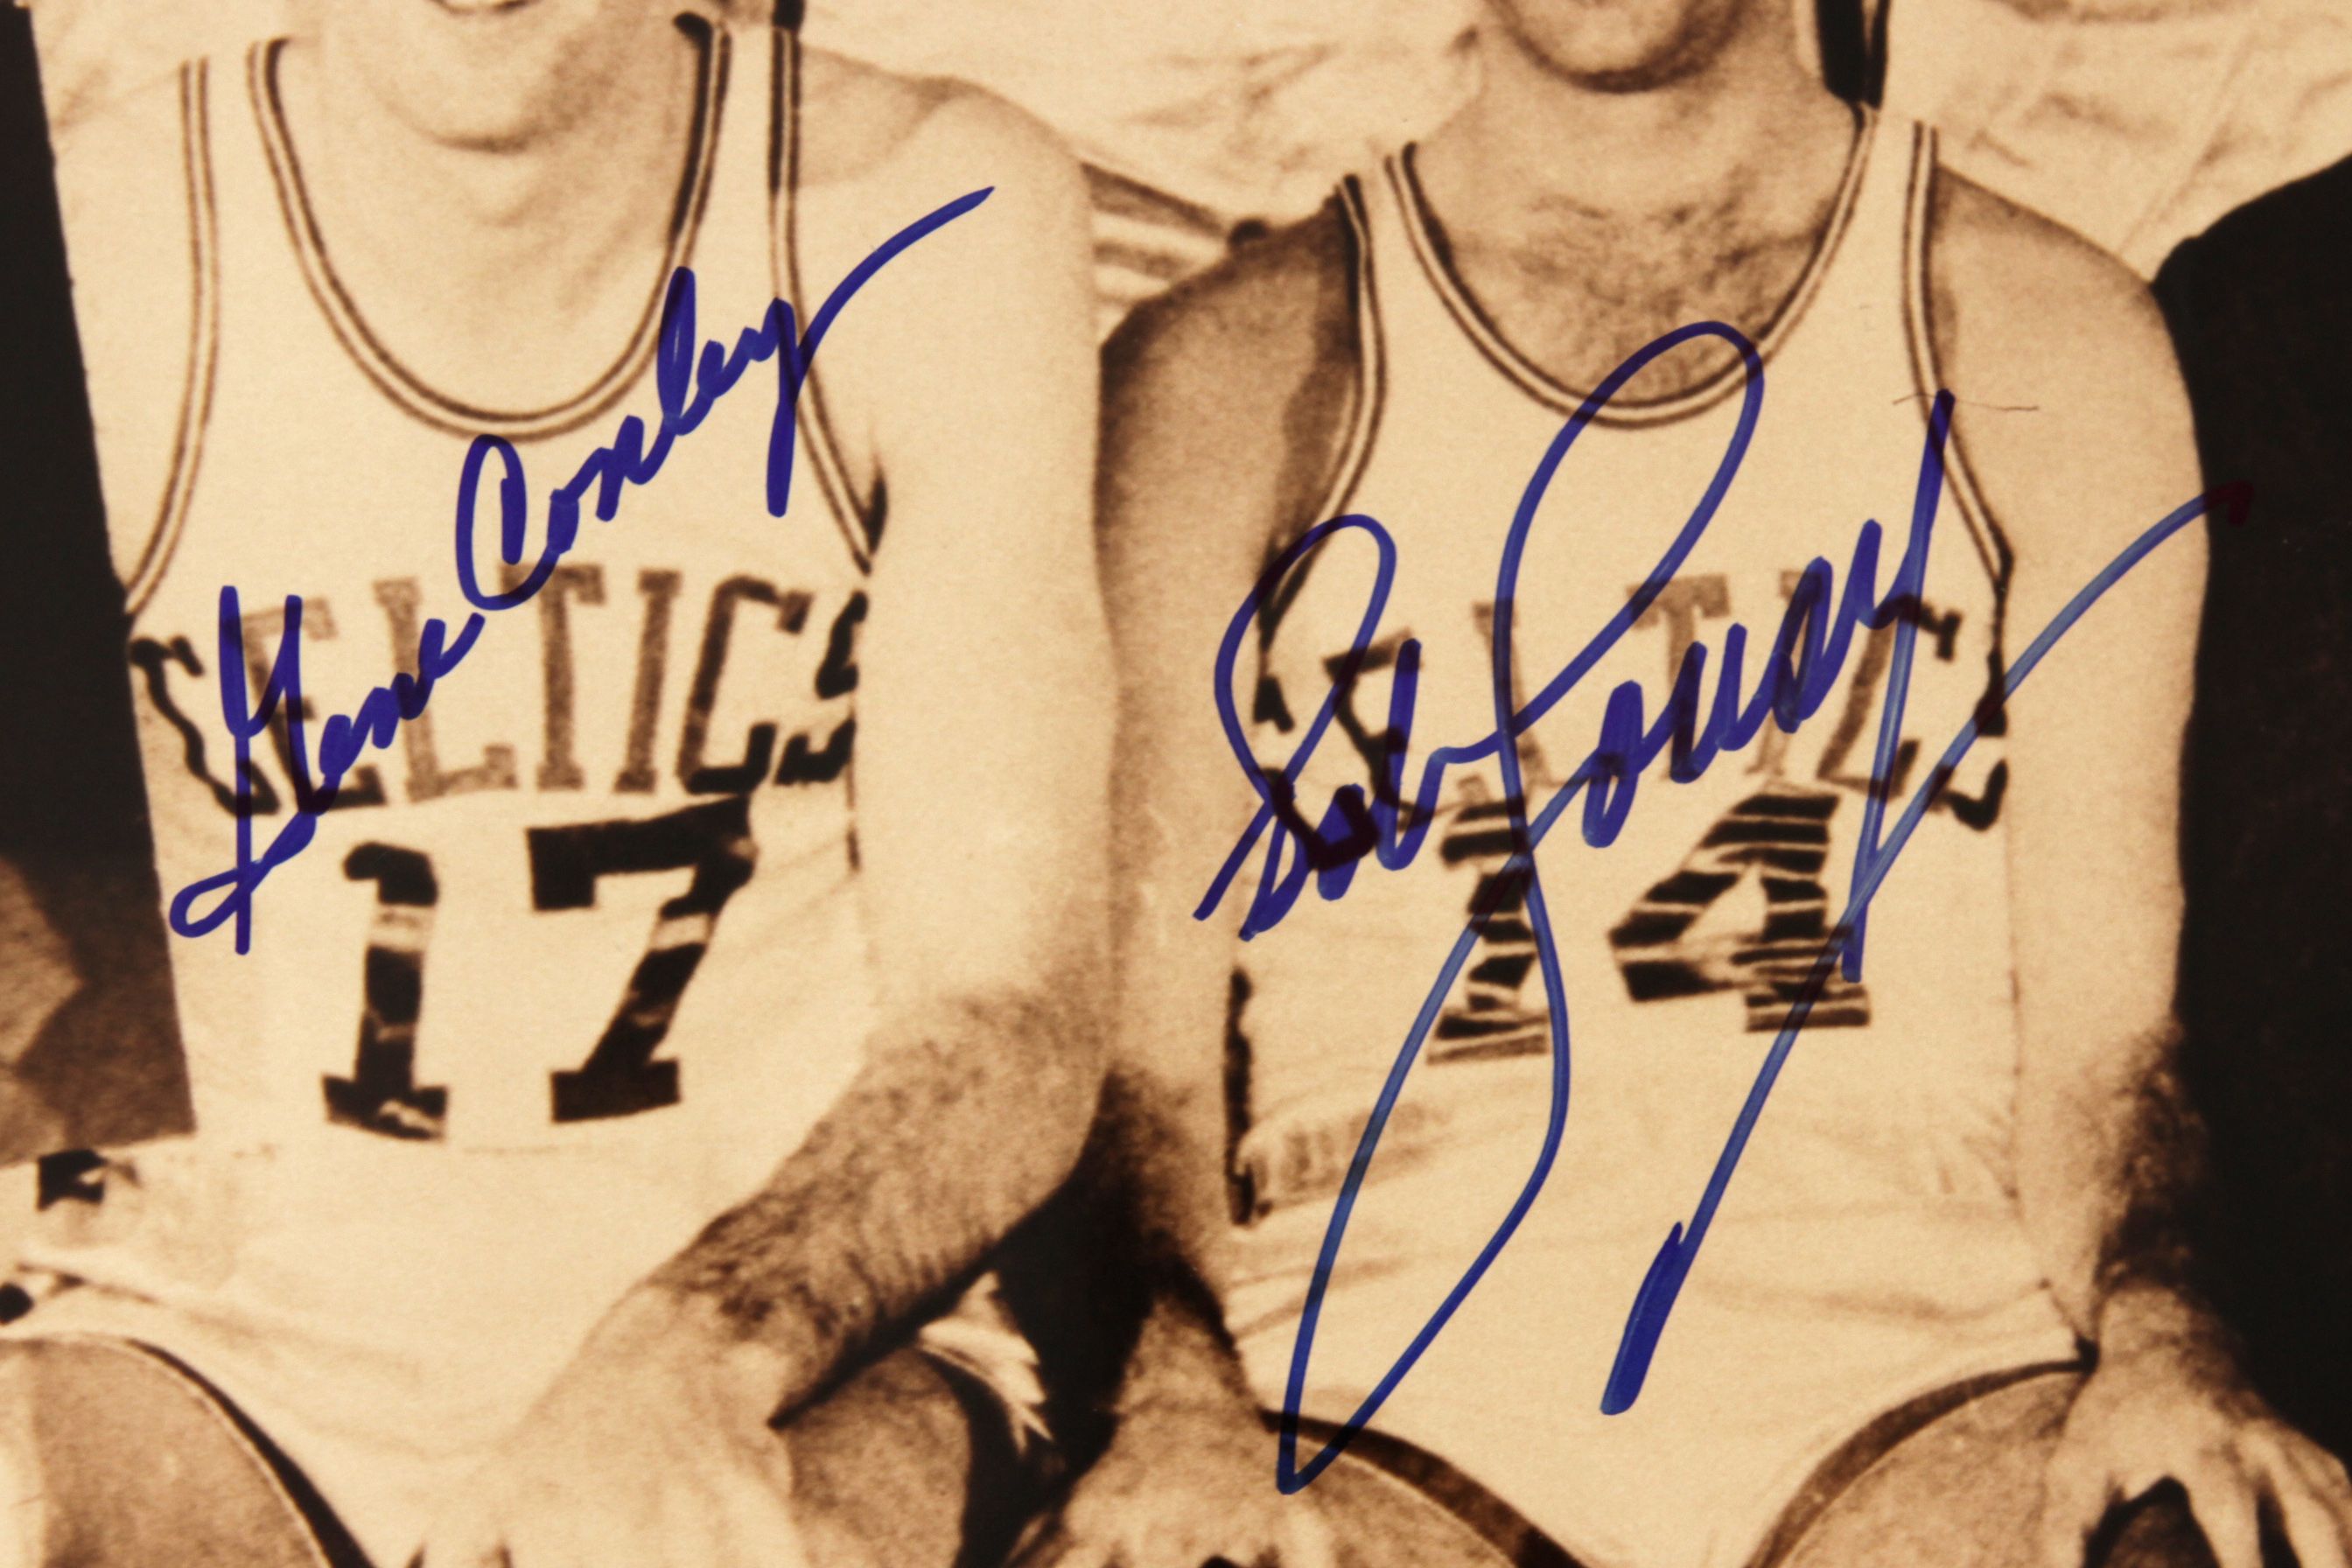 Bill Russell & Tom Heinsohn Autographed 16x20 Basketball Photo